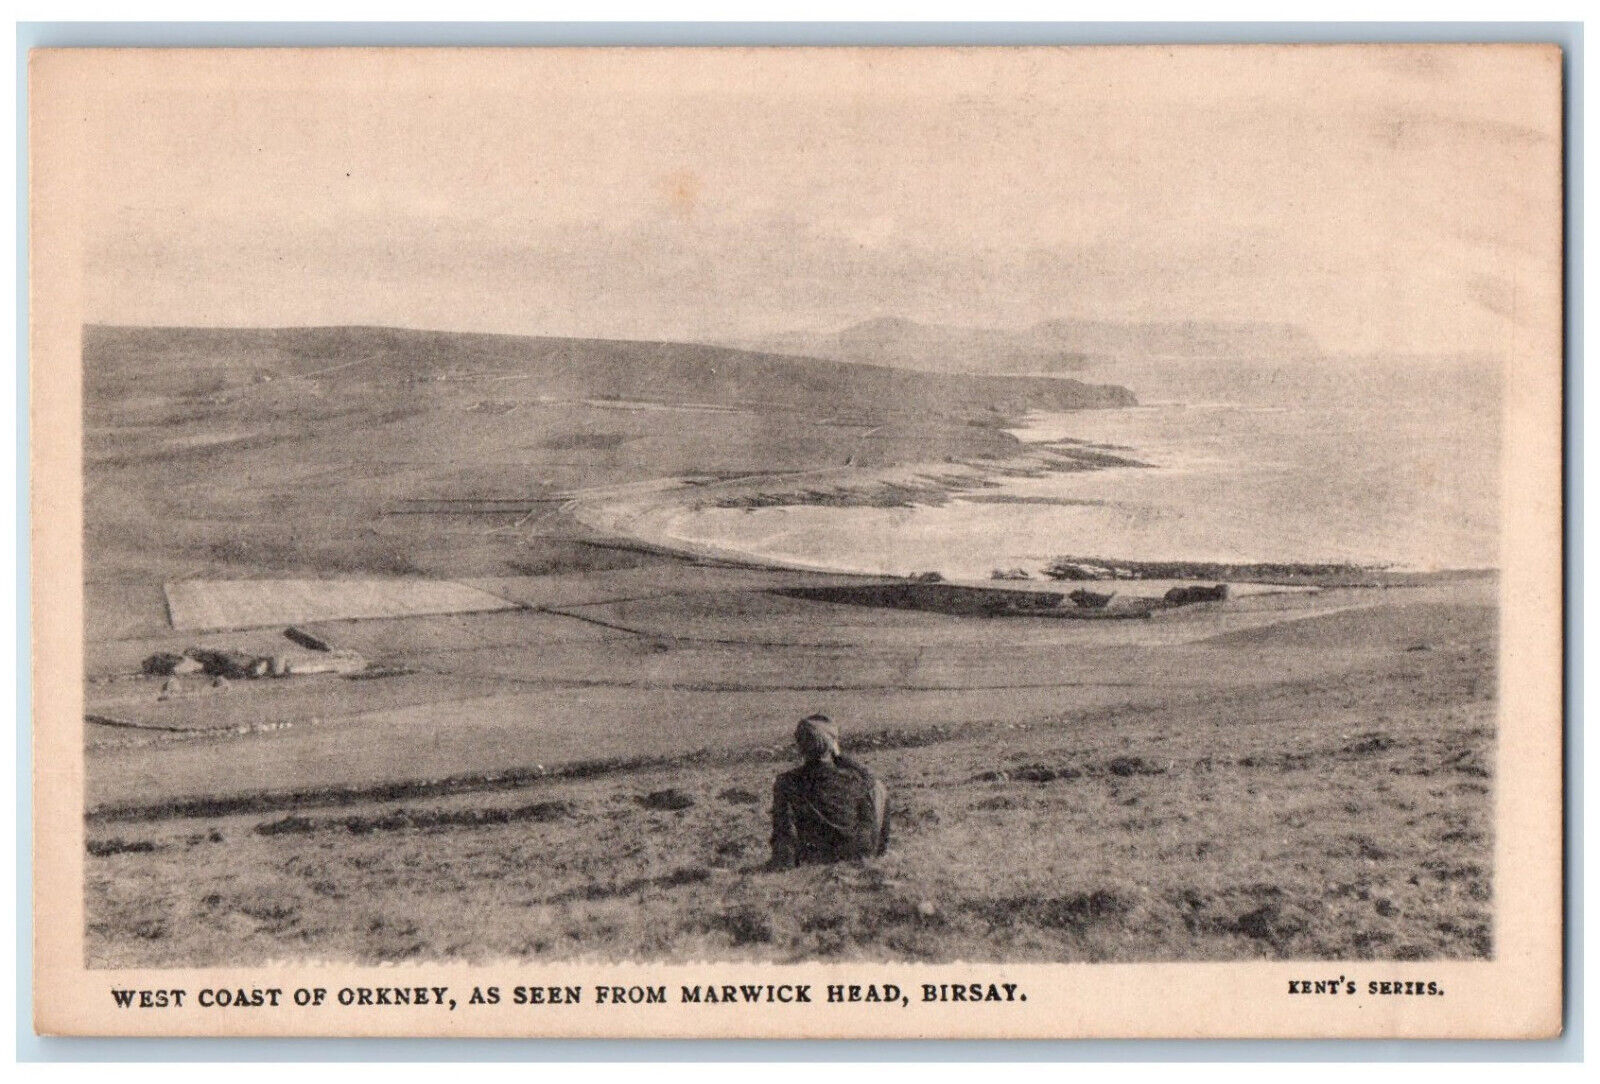 Birsay Orkney Scotland Postcard West Coast of Orkney from Marwick Head c1930's